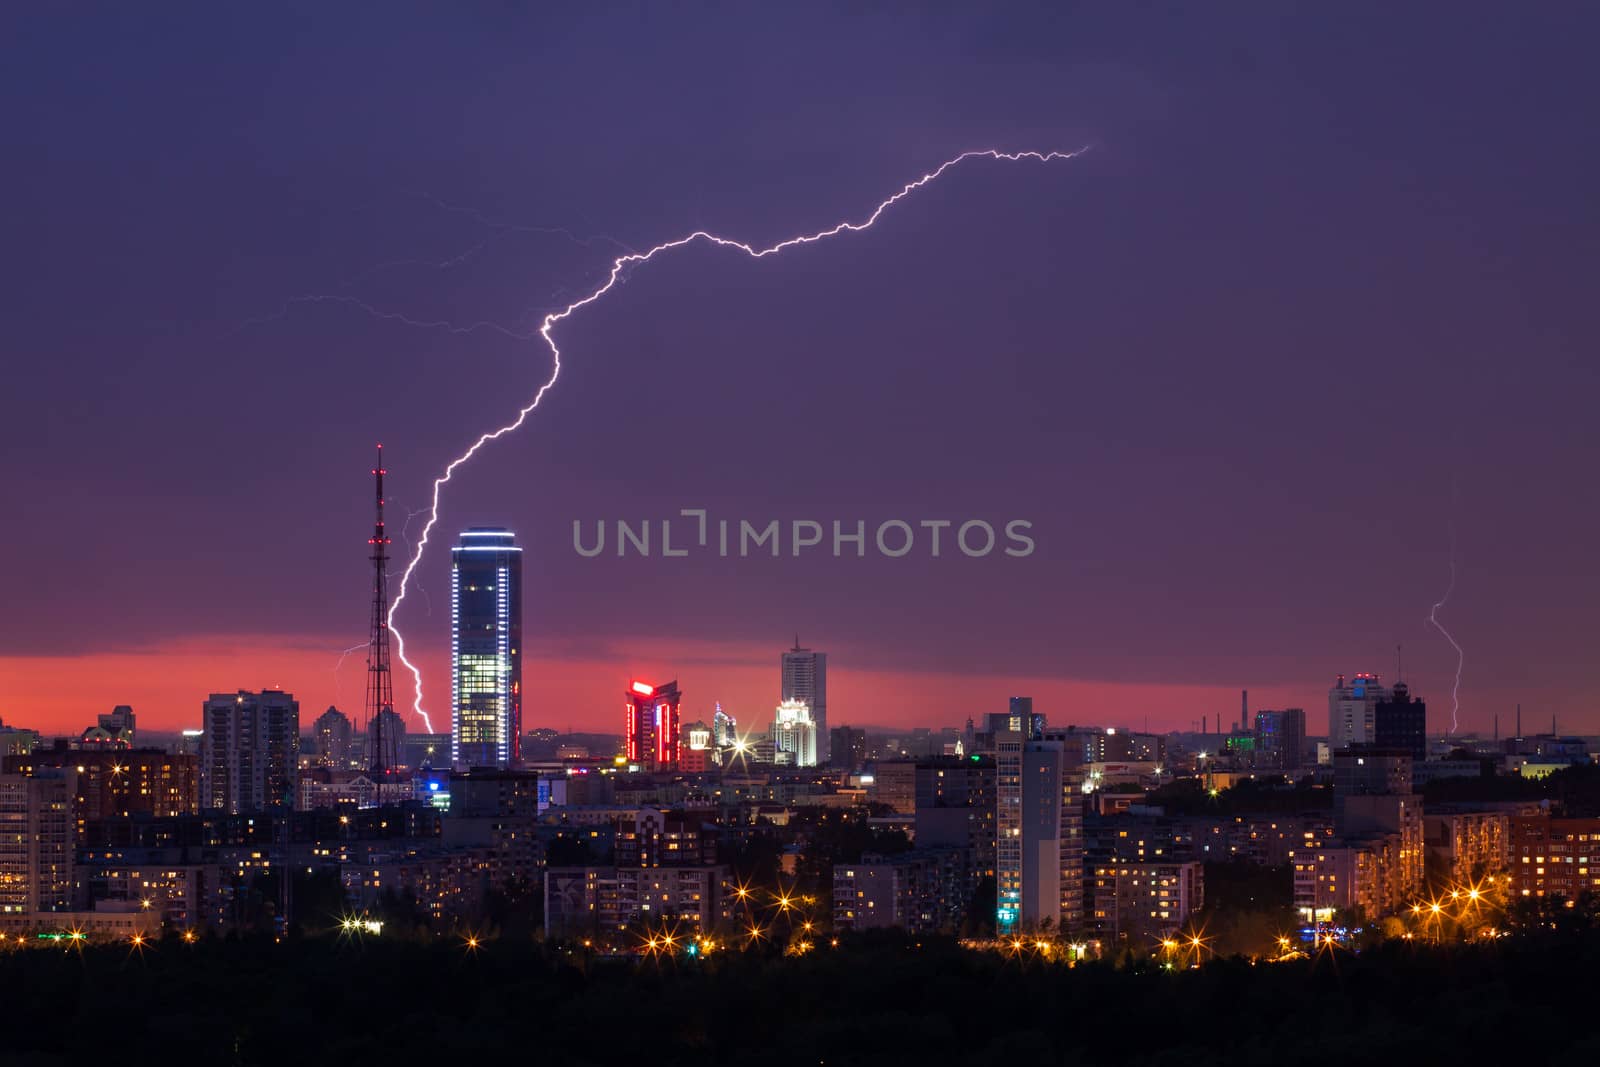 lightning storm over city at night